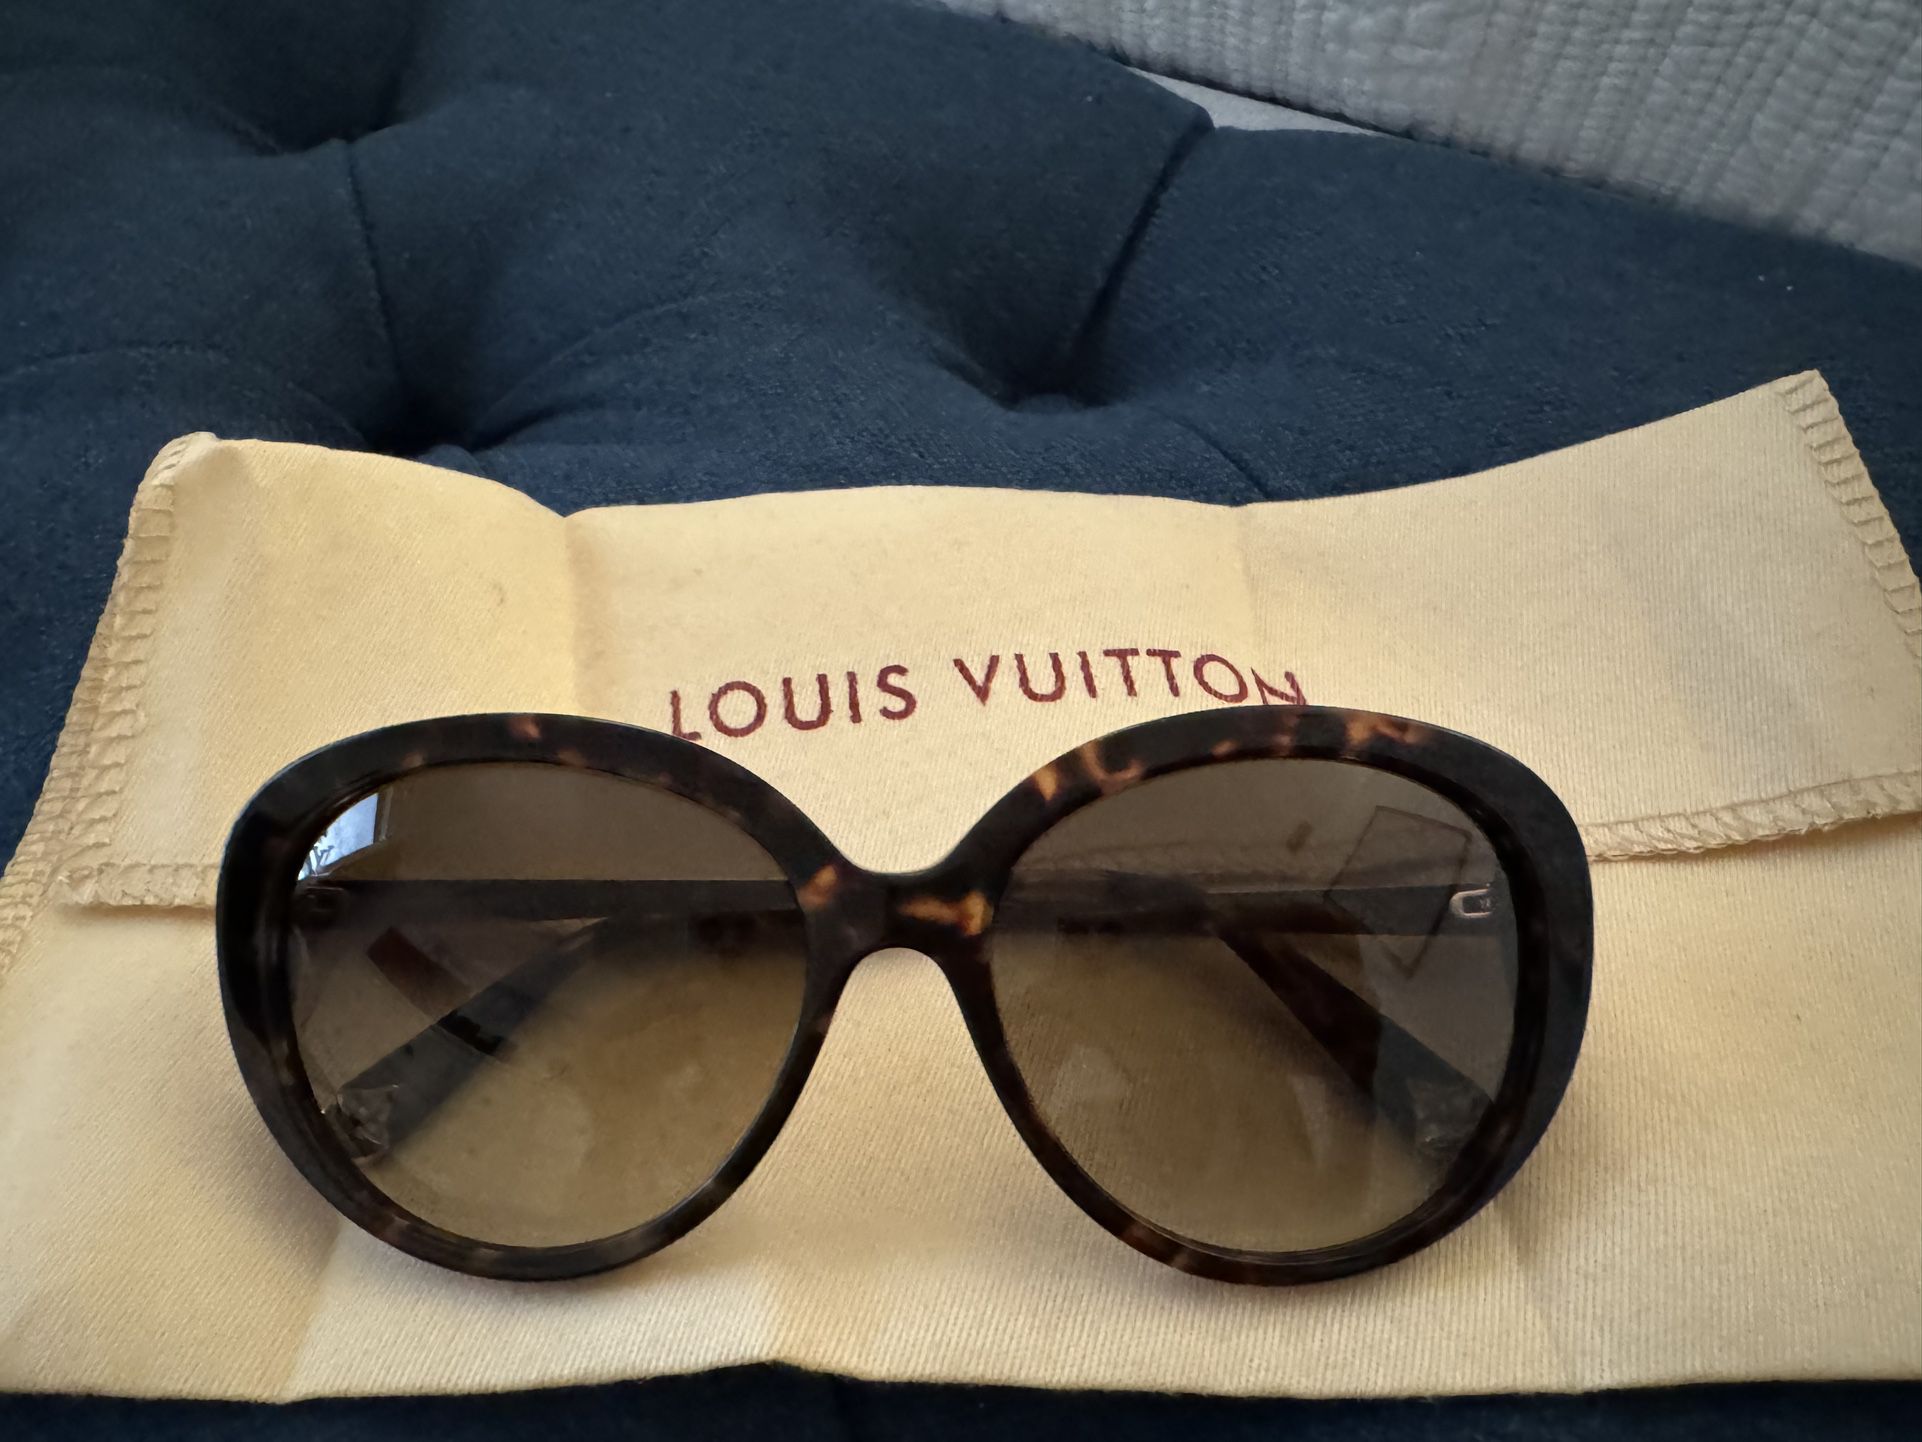 Luis Vuitton sunglasses 